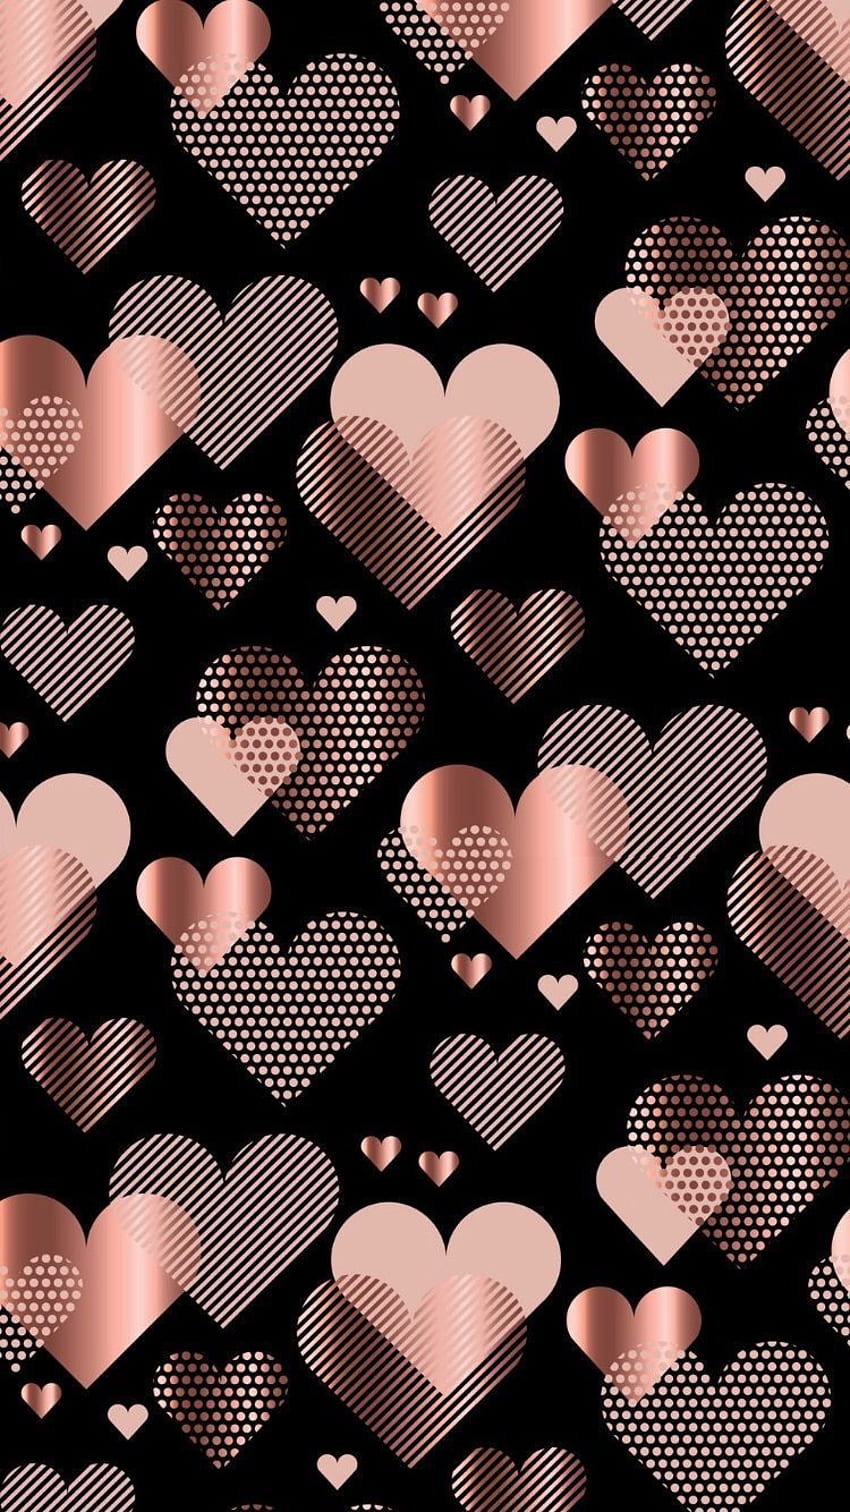 bGold Hearts Wallpaperb  WallpaperSafari